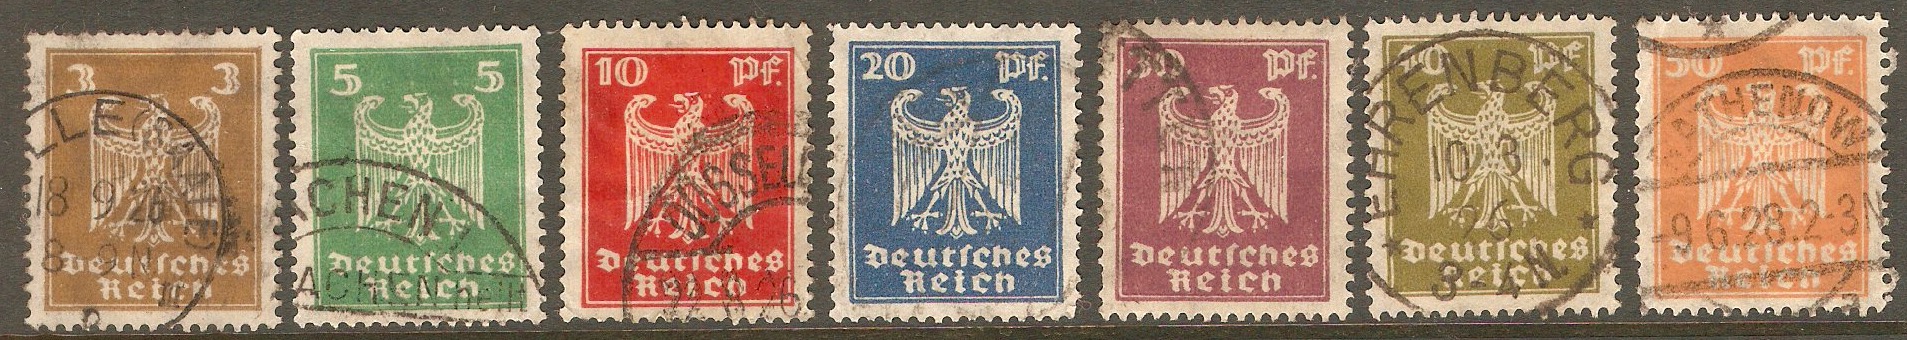 Germany 1924 Eagle set. SG369-SG375.